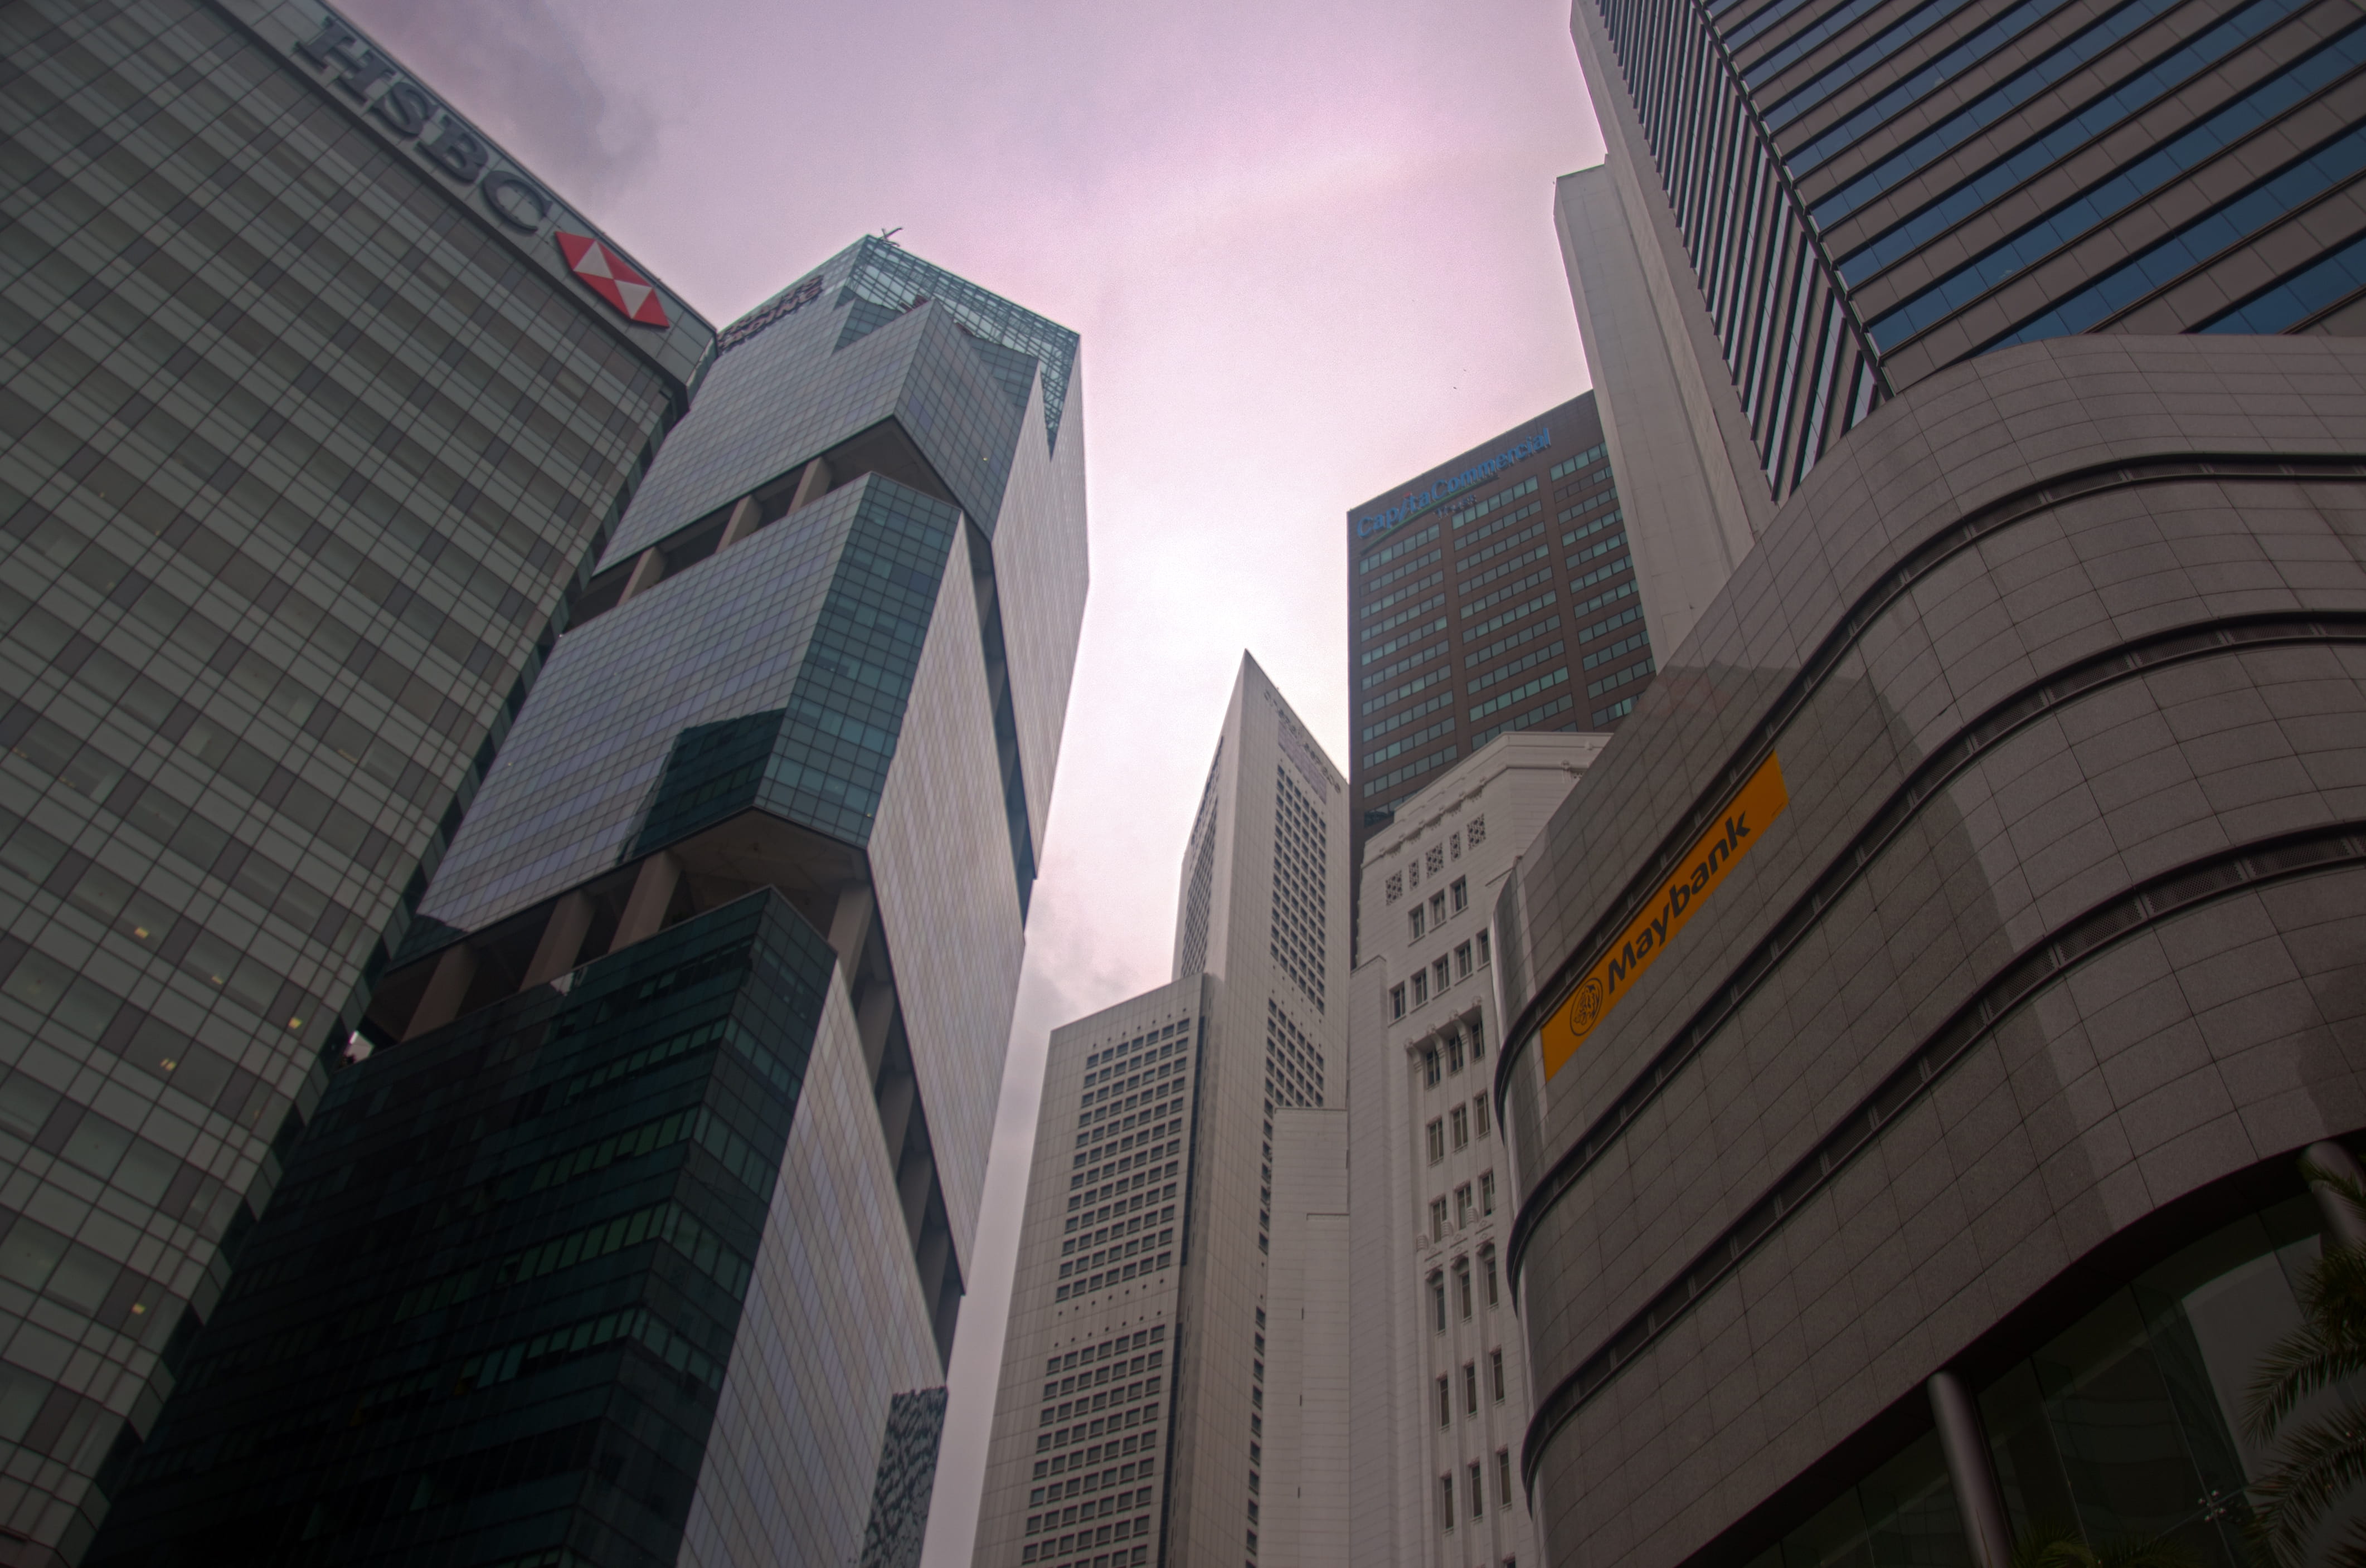 singapore, hsbc collyer quay branch, skyline, skyscraper, modern architecture